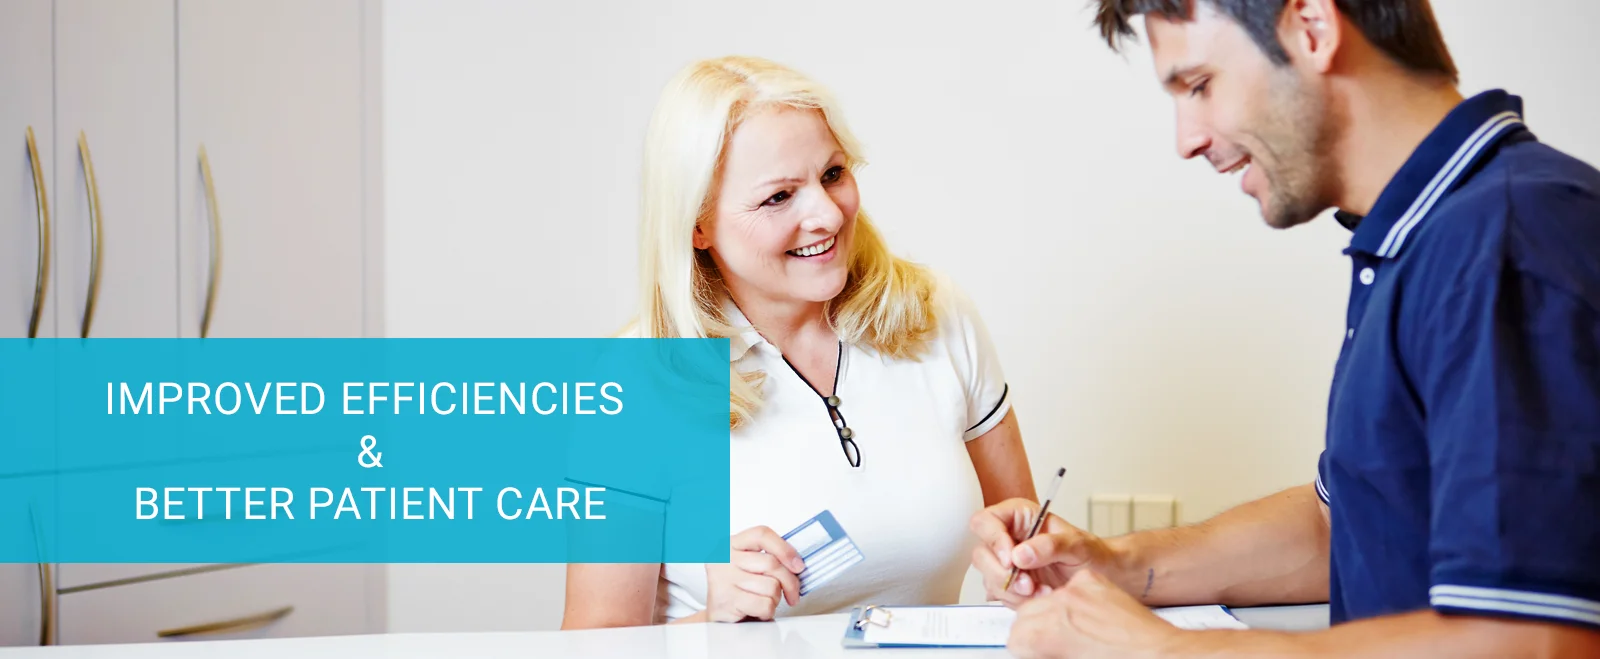 Improved Efficiencies & Better Patient Care